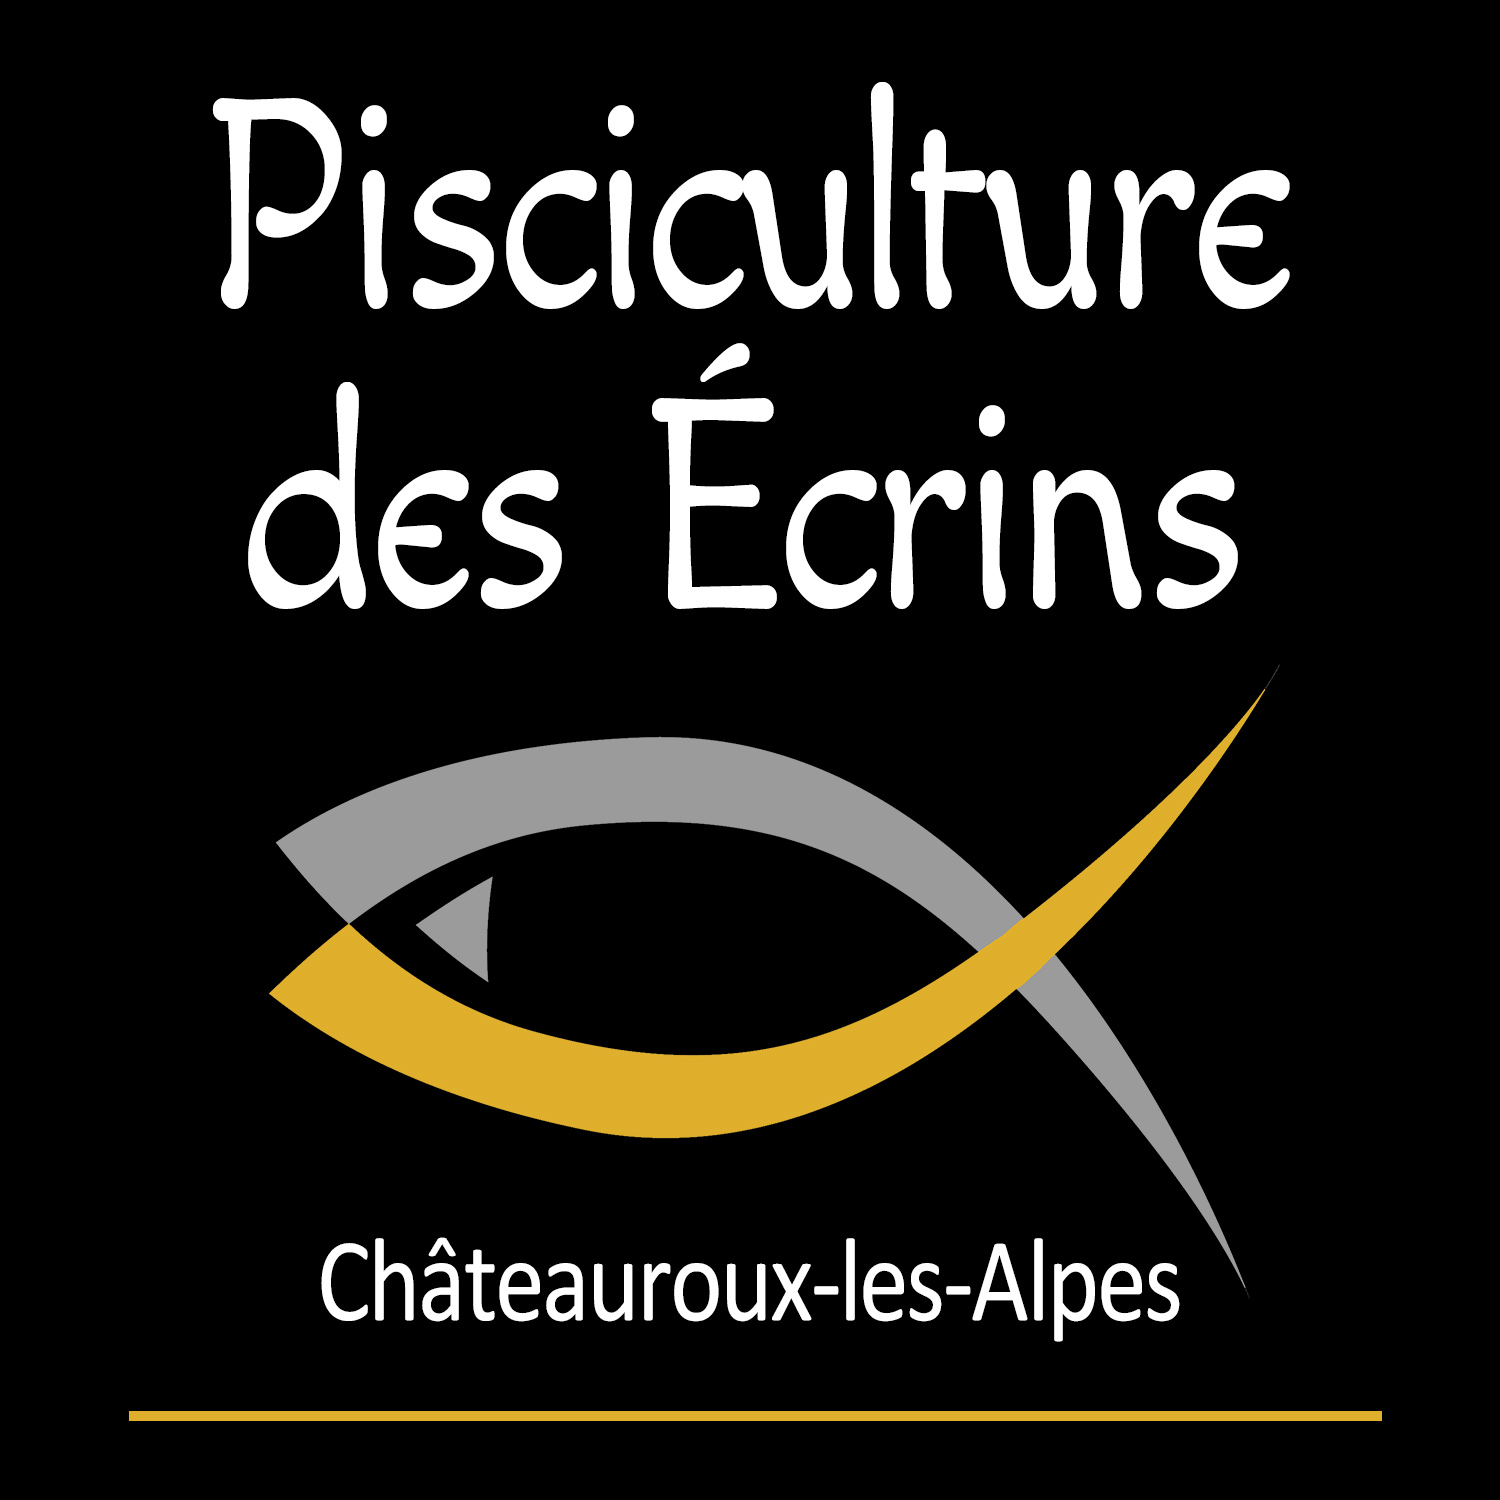 ©Pisciculture des Ecrins